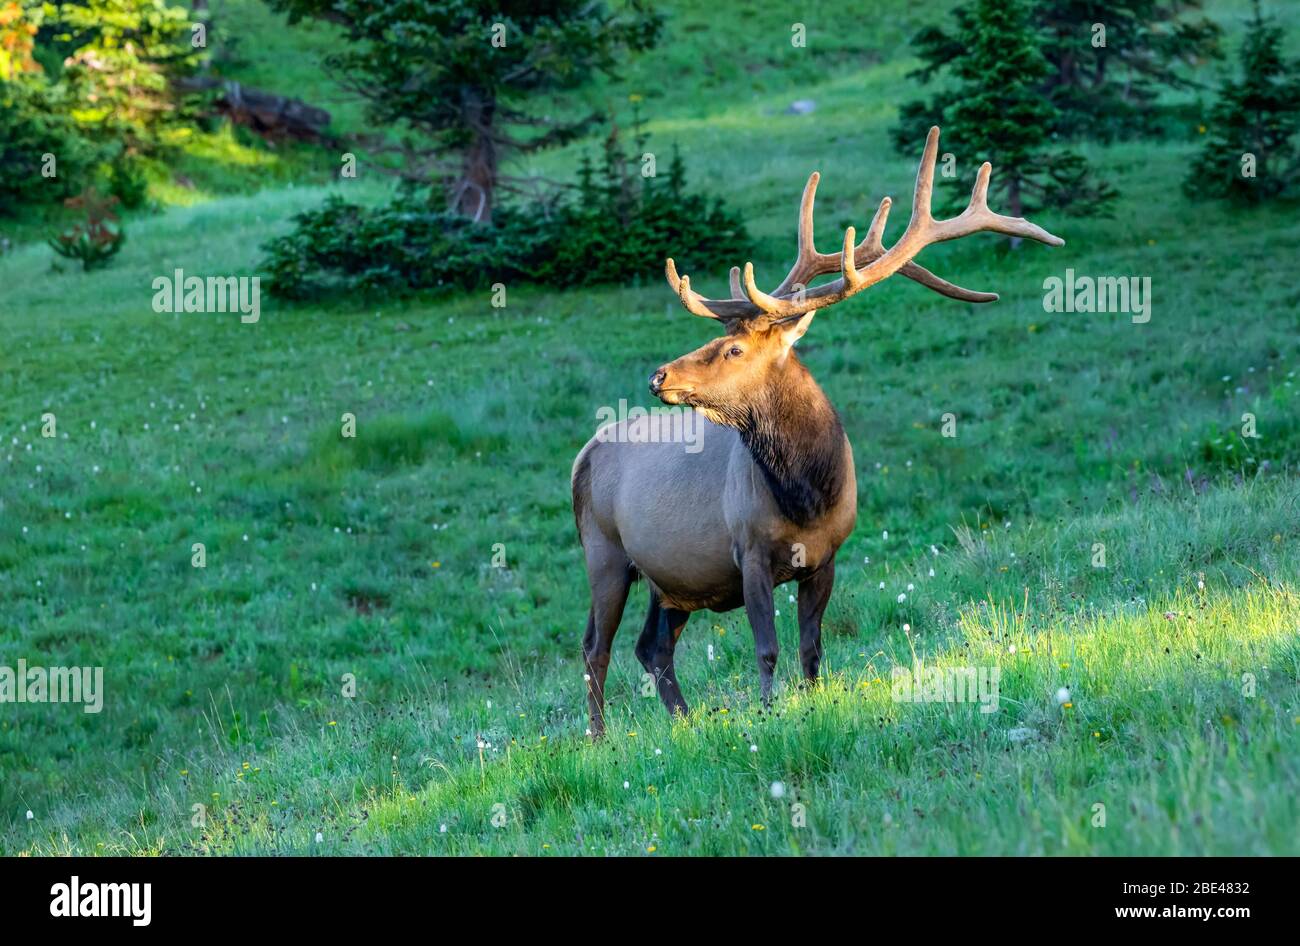 Bull elk (Cervus canadensis) standing in a lush field; Estes Park, Colorado, United States of America Stock Photo